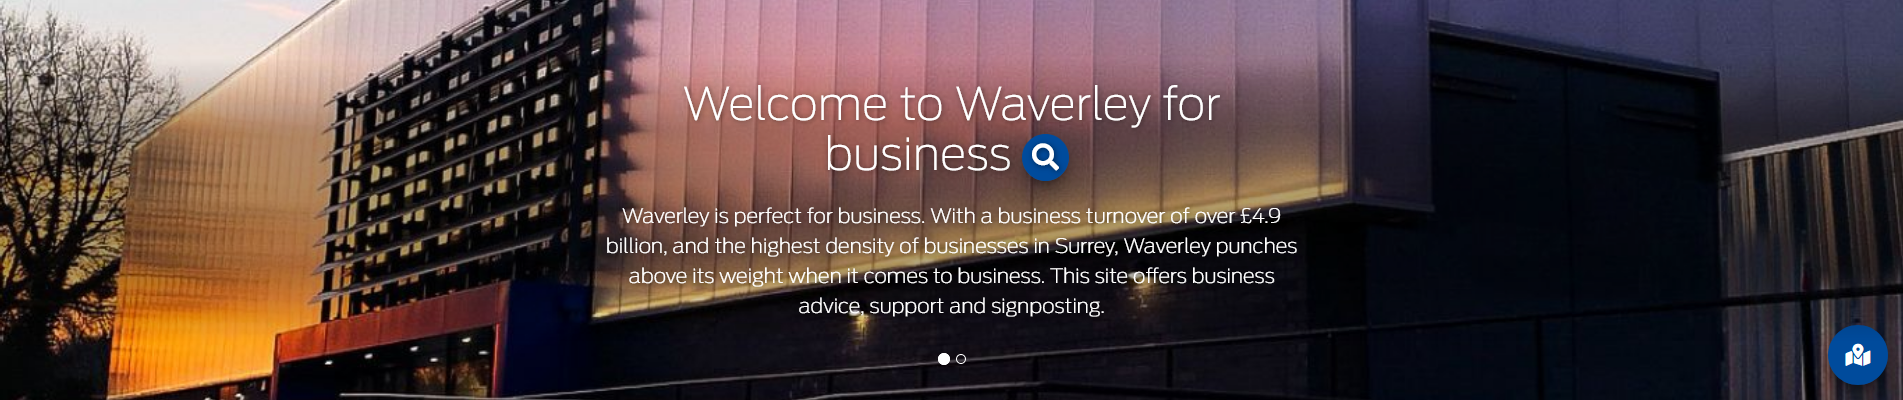 New Business Waverley website